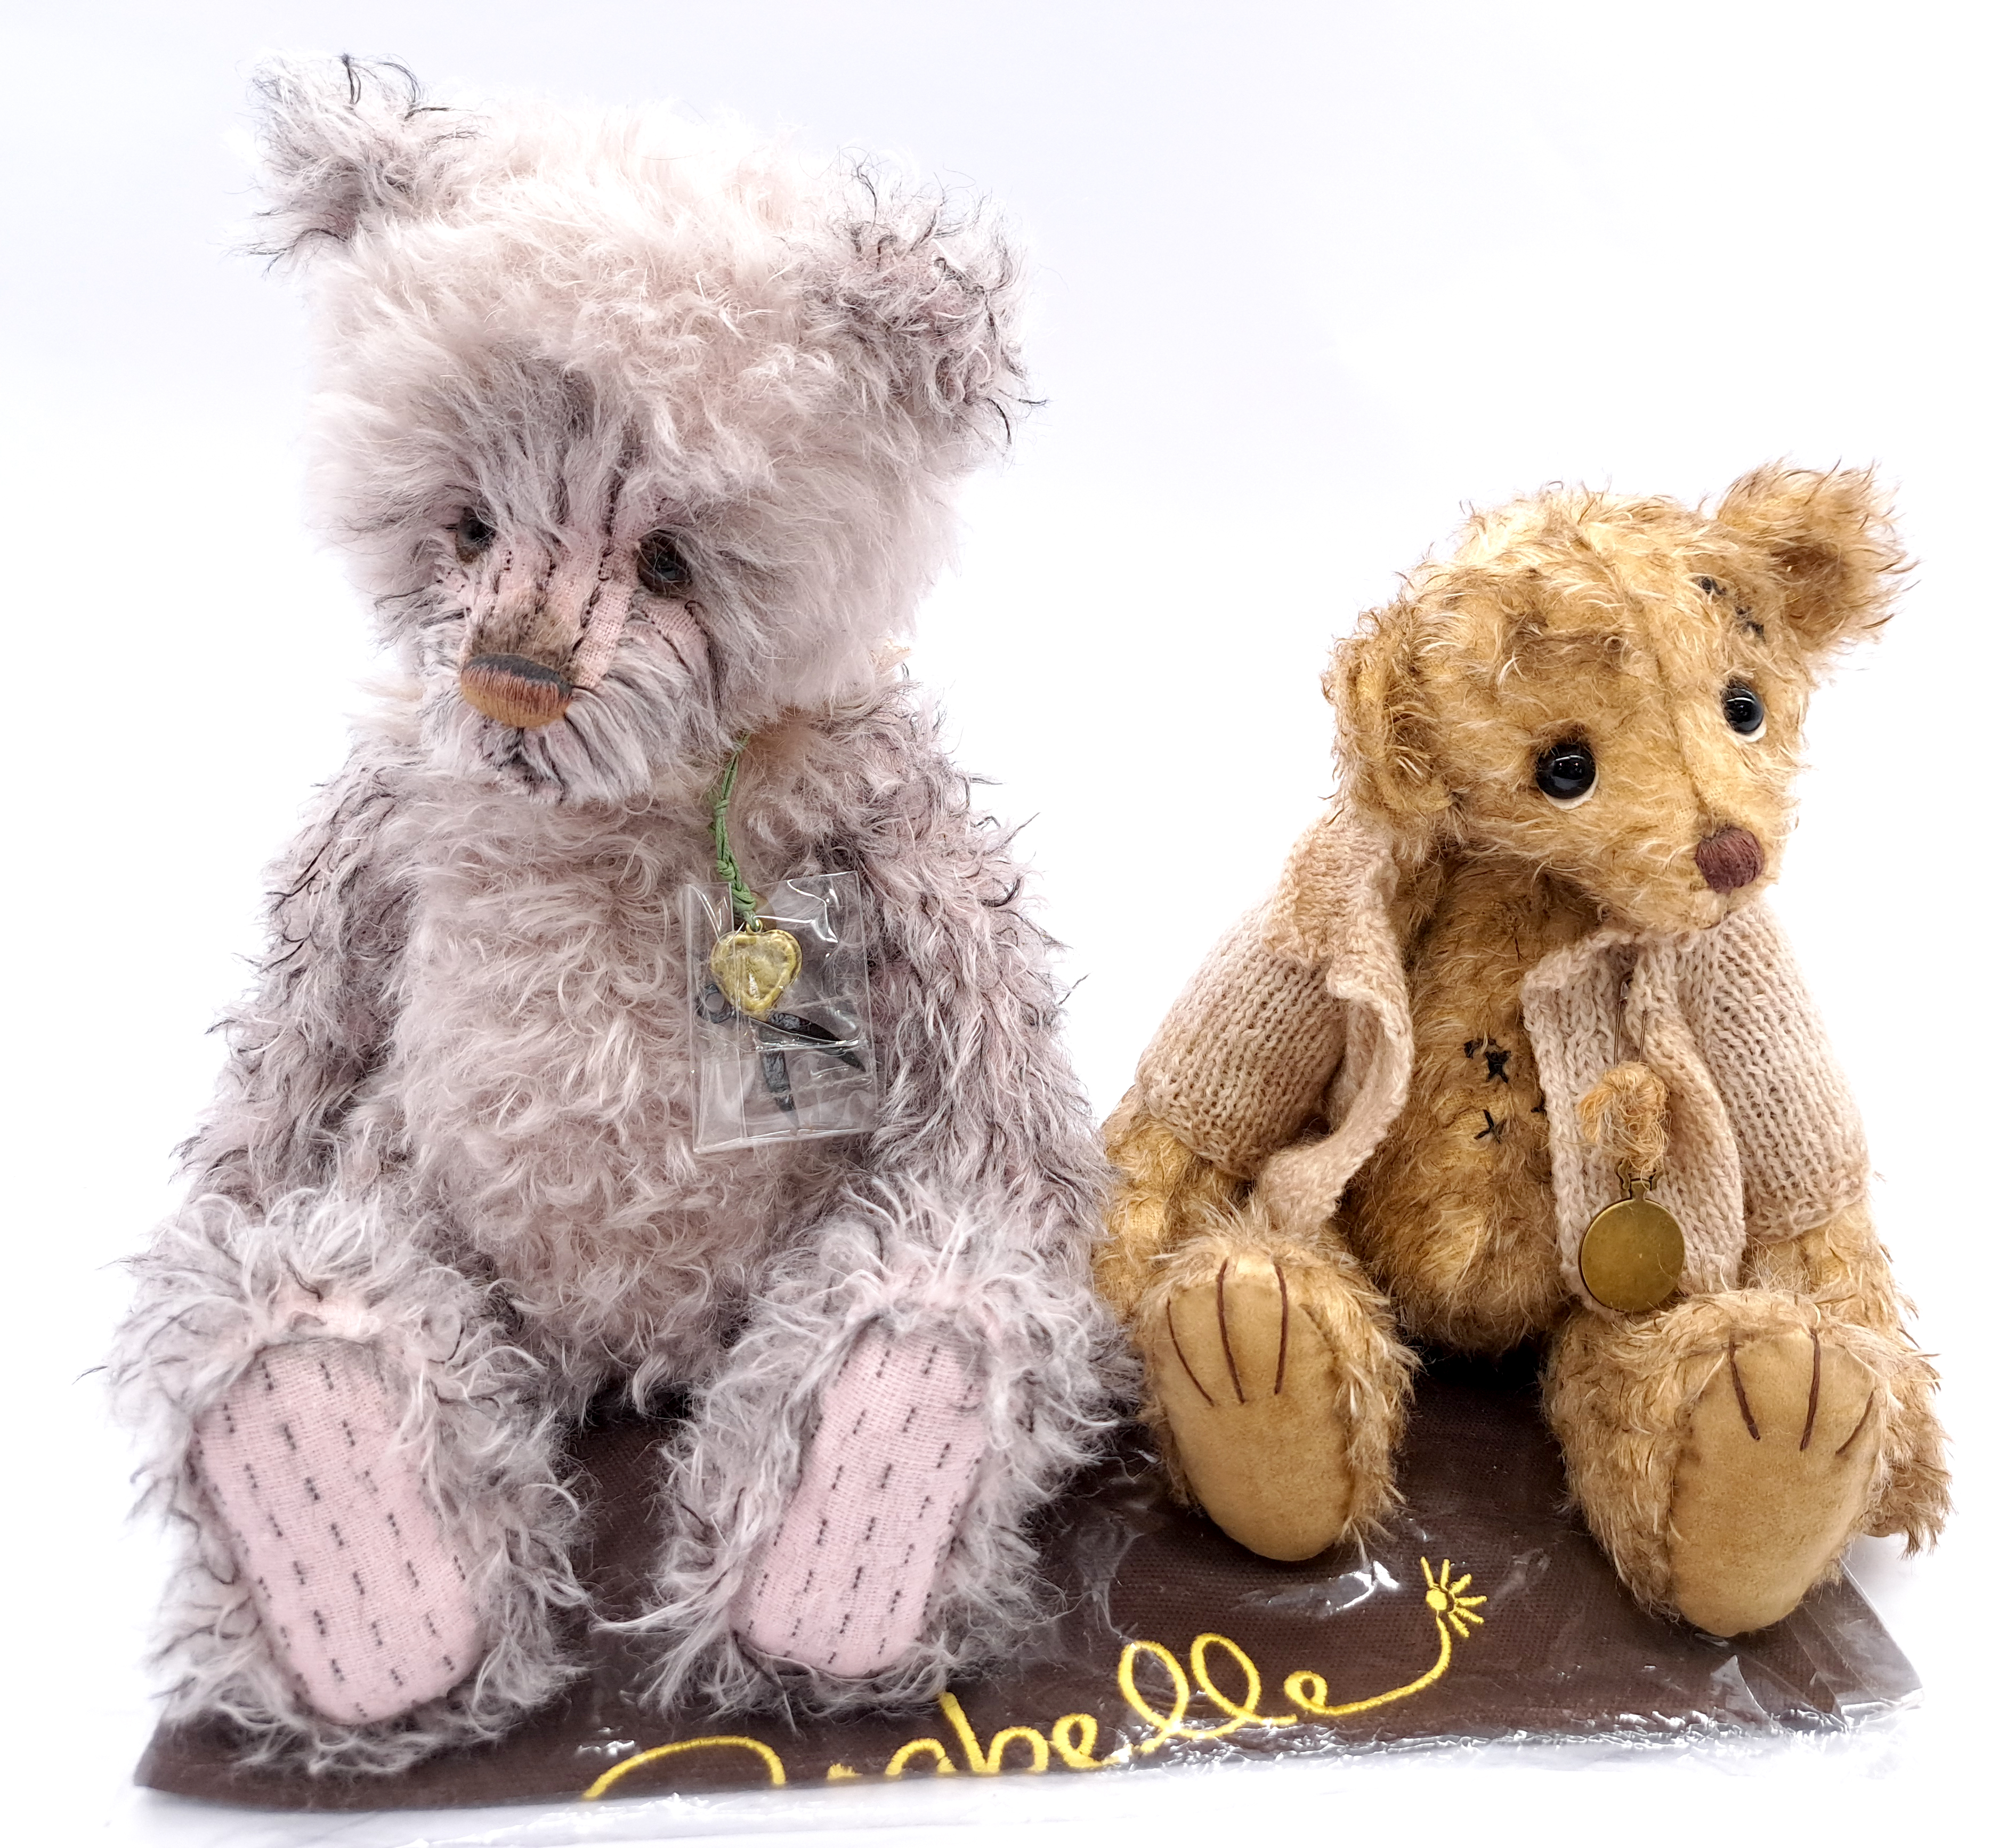 Pair of modern teddy bears